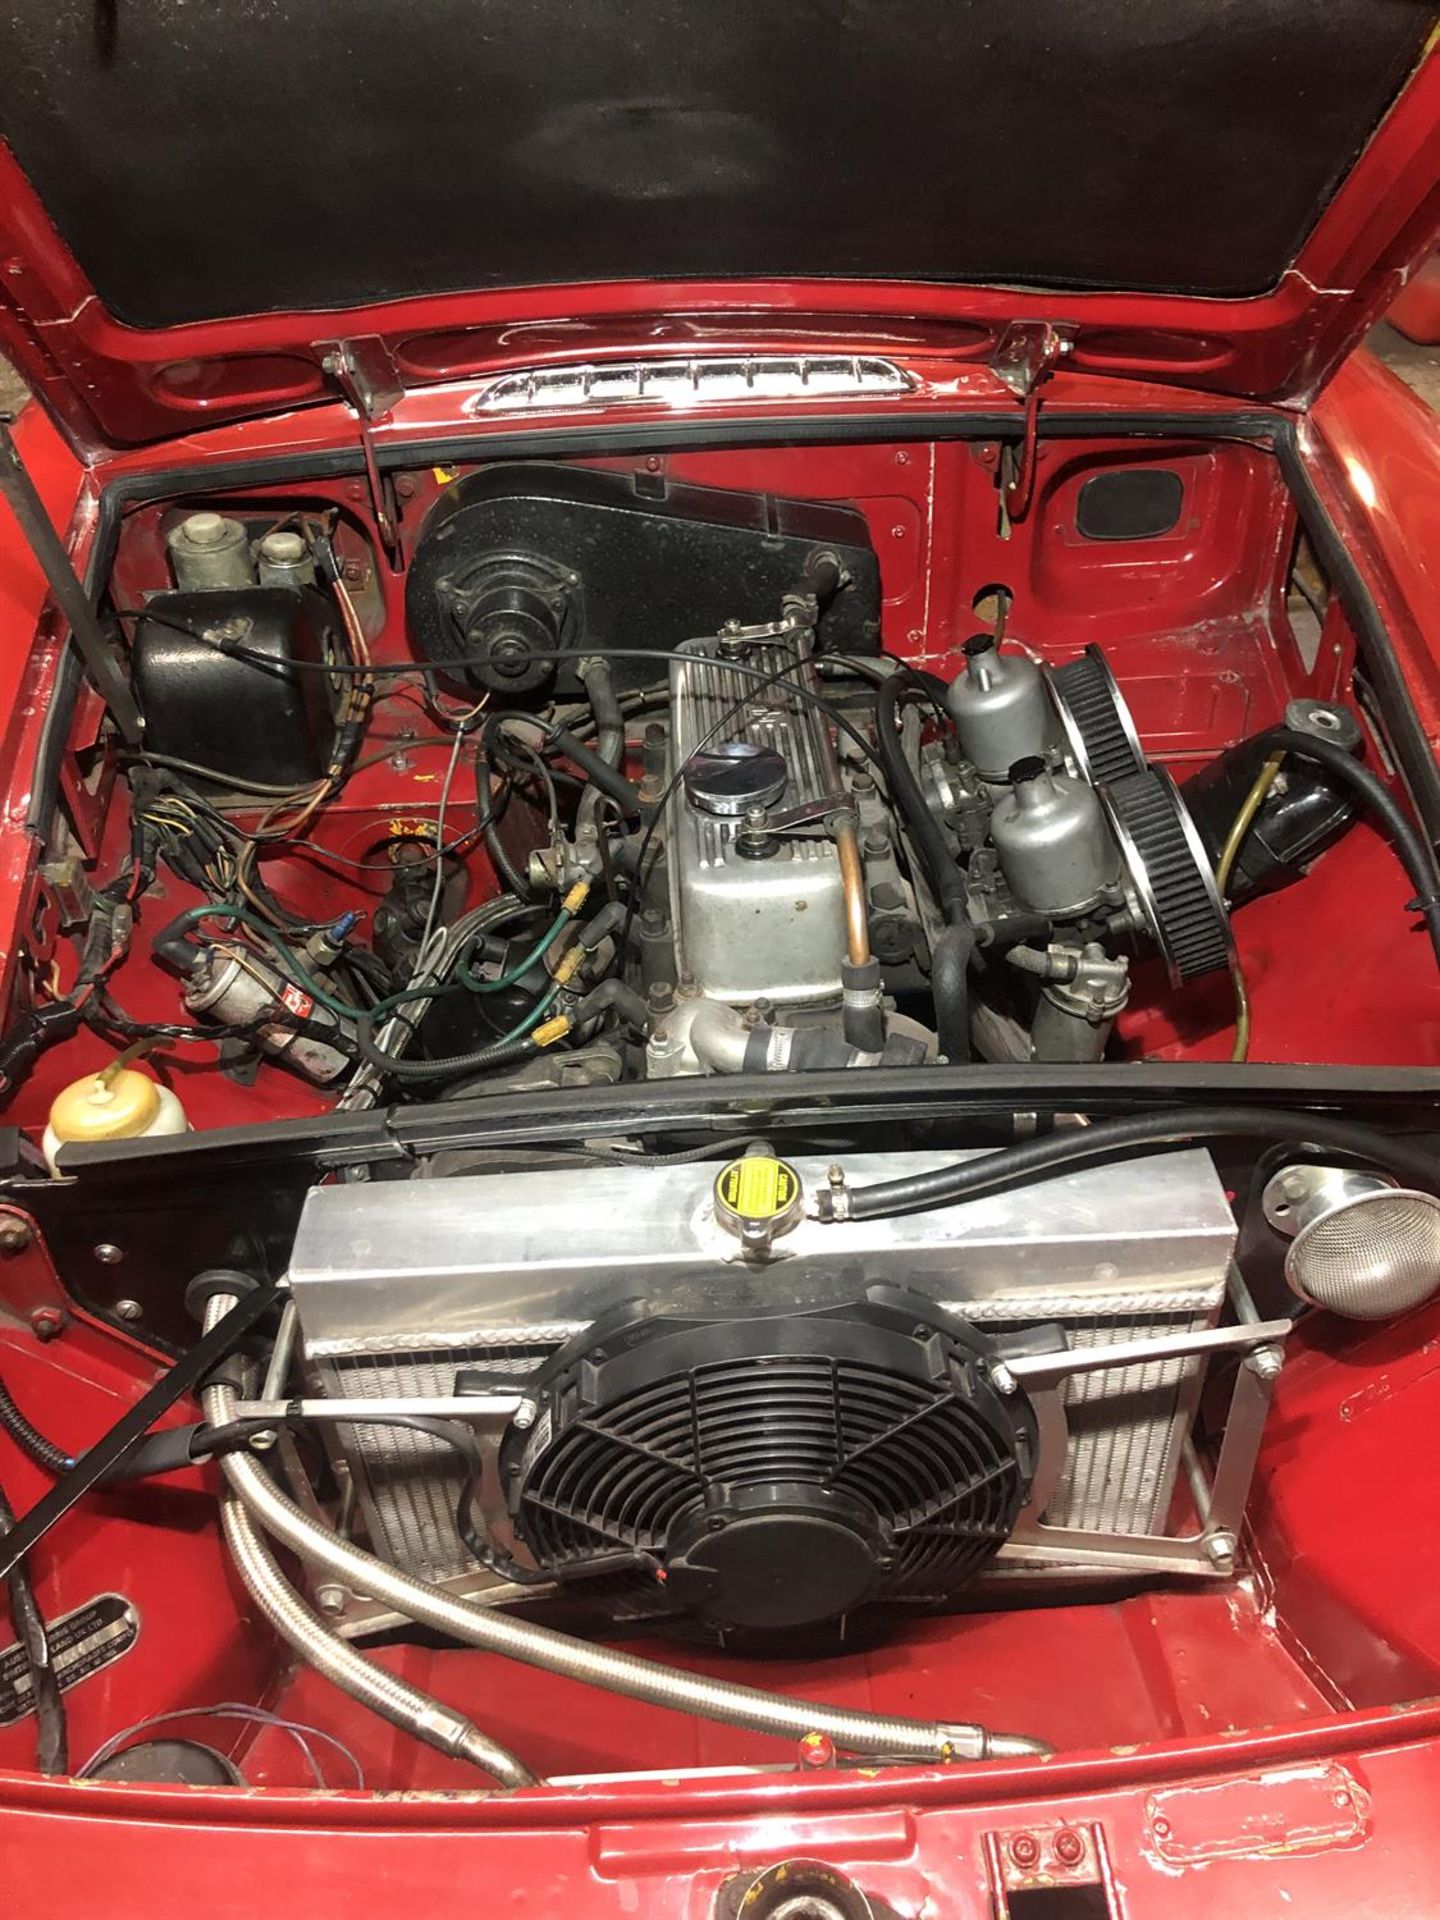 1969 MG B Roadster - Image 3 of 10